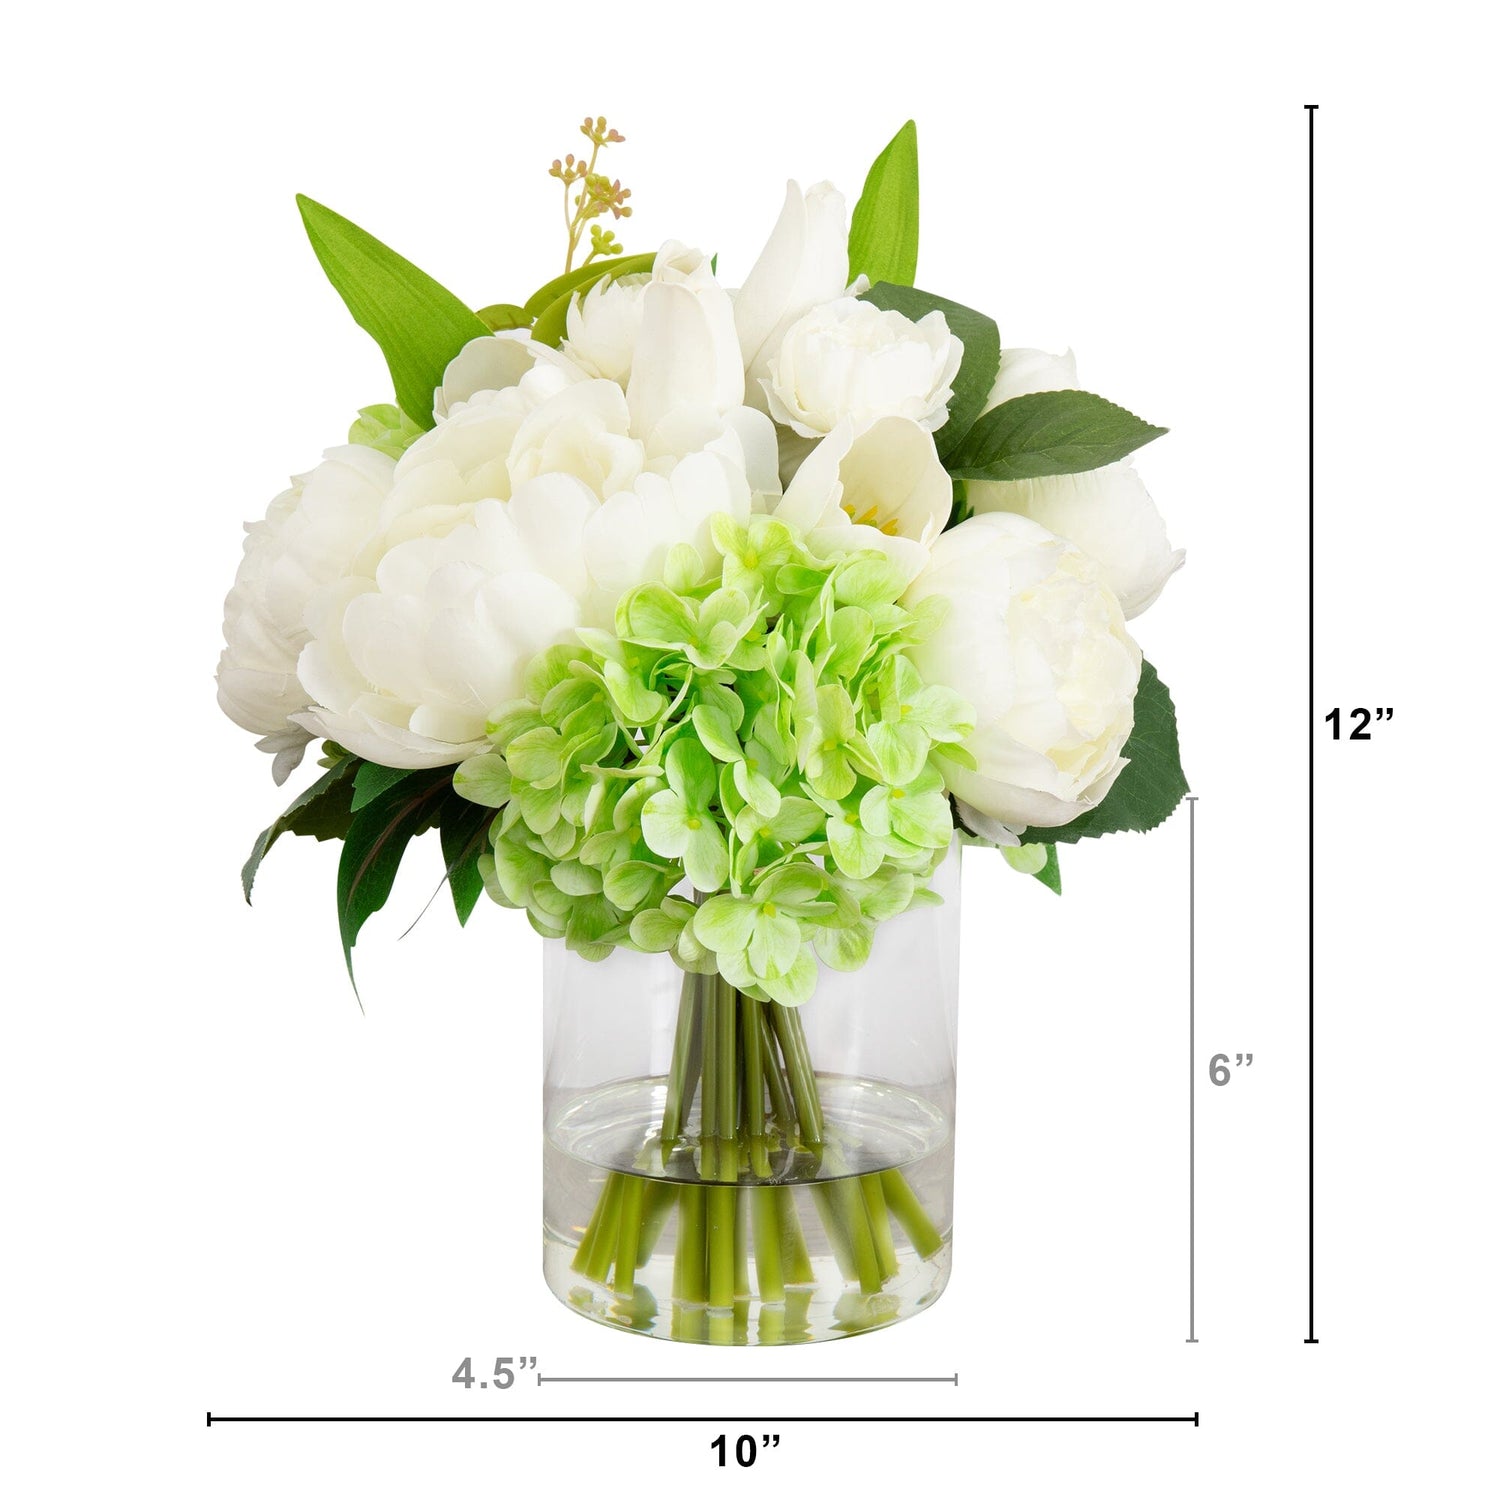 12" Artificial Peony, Hydrangea and Tulip Arrangement in Glass Vase